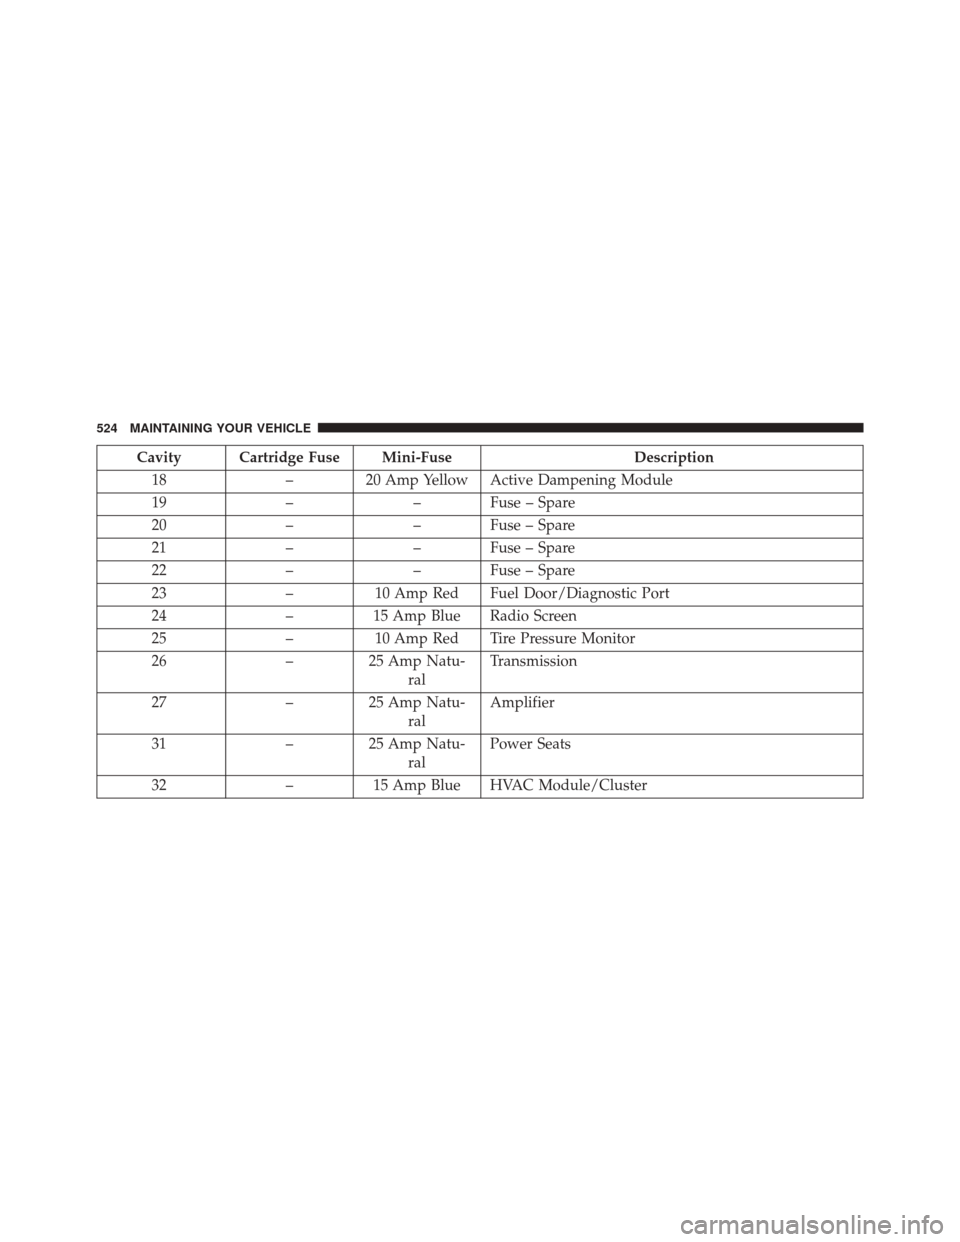 CHRYSLER 300 SRT 2014 2.G User Guide Cavity Cartridge Fuse Mini-FuseDescription
18 – 20 Amp Yellow Active Dampening Module
19 –– Fuse – Spare
20 –– Fuse – Spare
21 –– Fuse – Spare
22 –– Fuse – Spare
23 –10 Amp